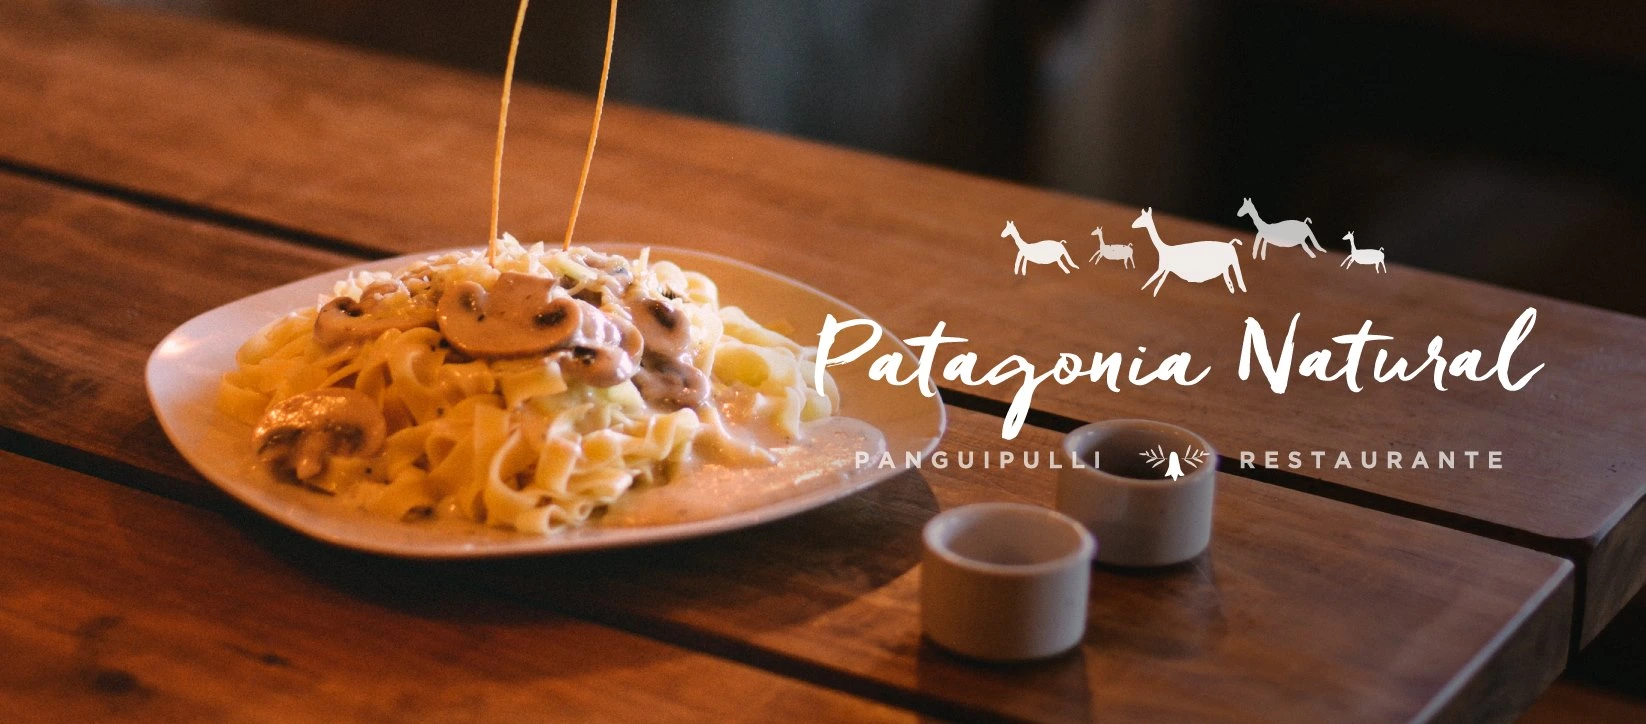 House Image of Restaurantes en Panguipulli: Una Experiencia Única en Patagonia Natural